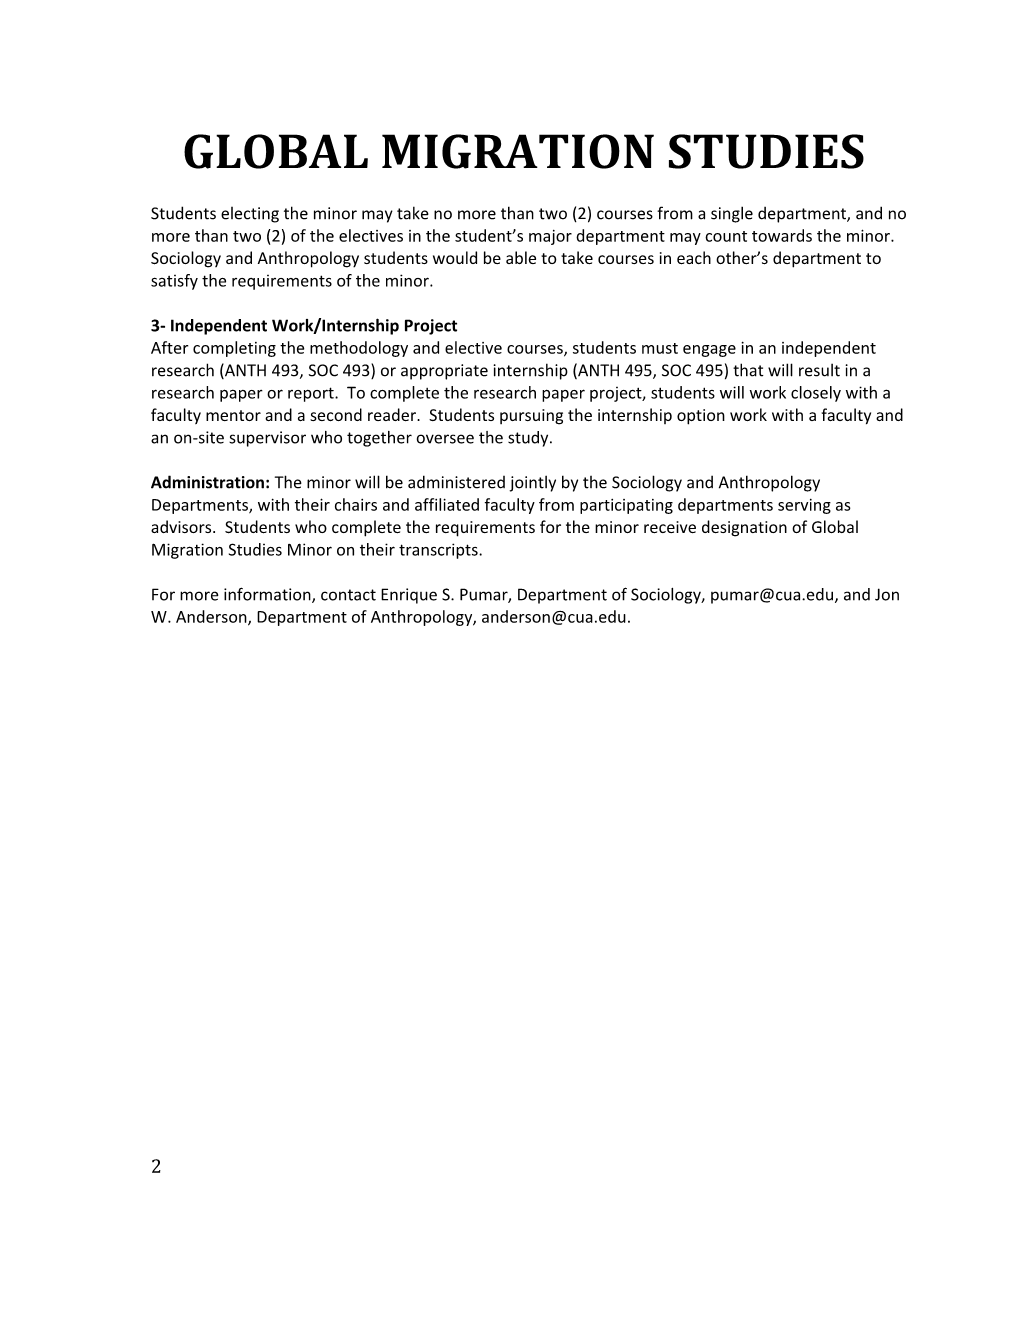 Global Migration Studies